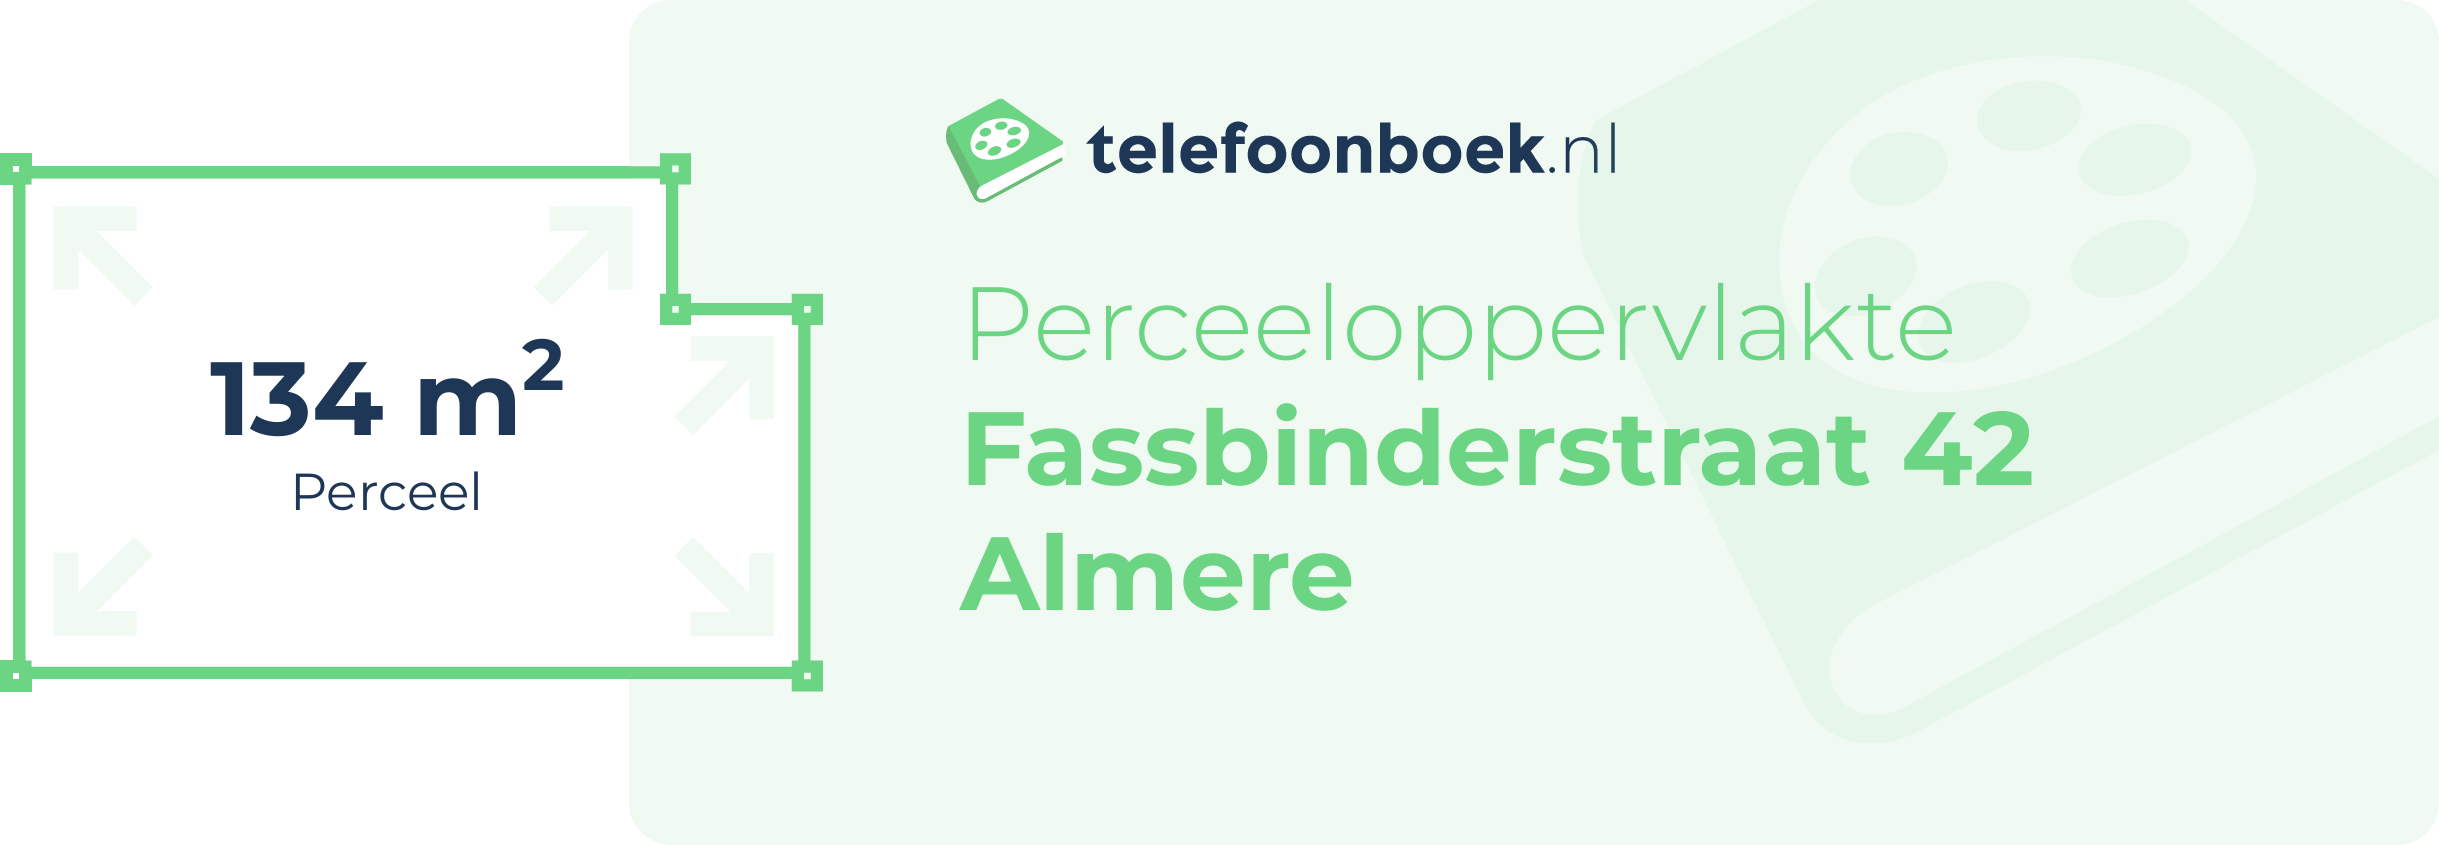 Perceeloppervlakte Fassbinderstraat 42 Almere